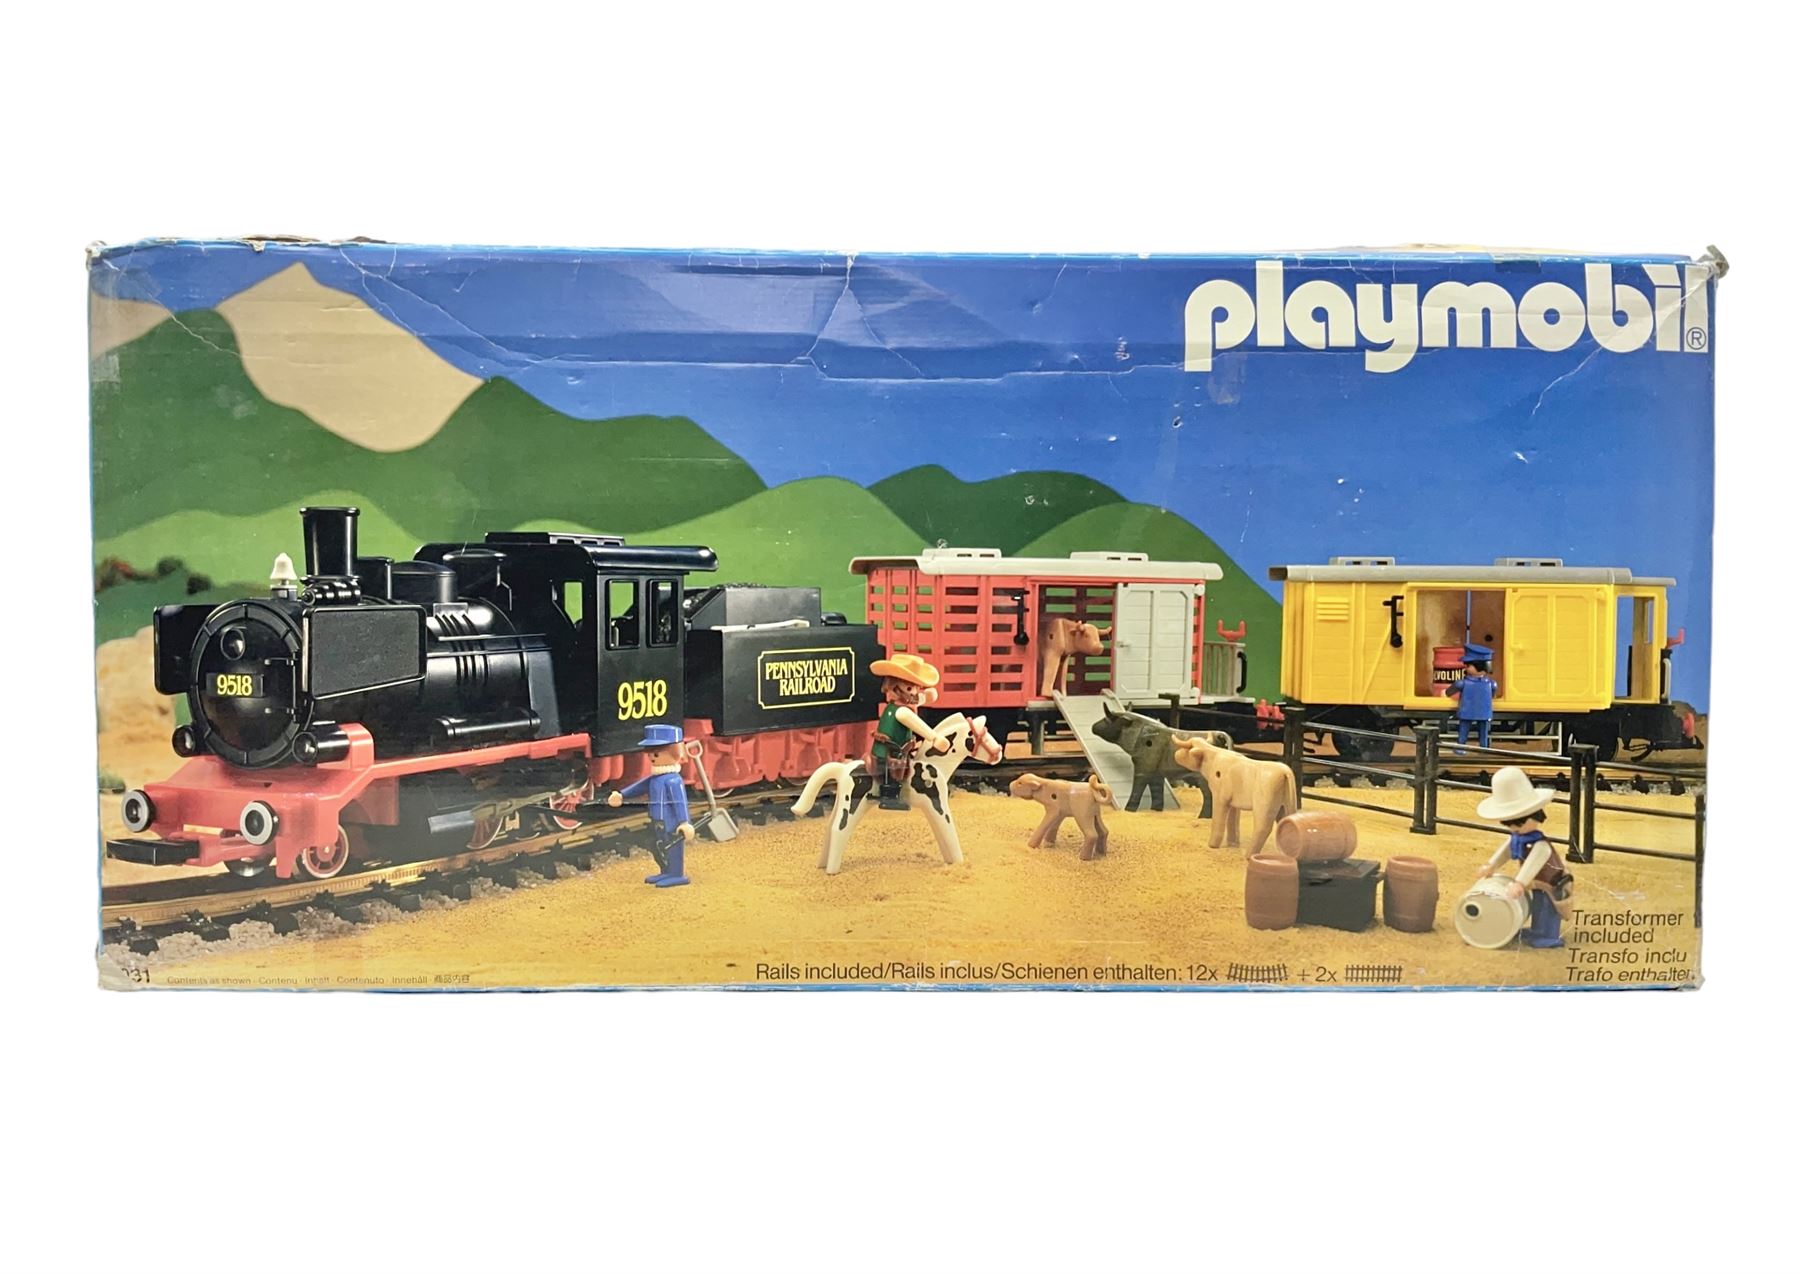 Playmobil train manuals (part 2)